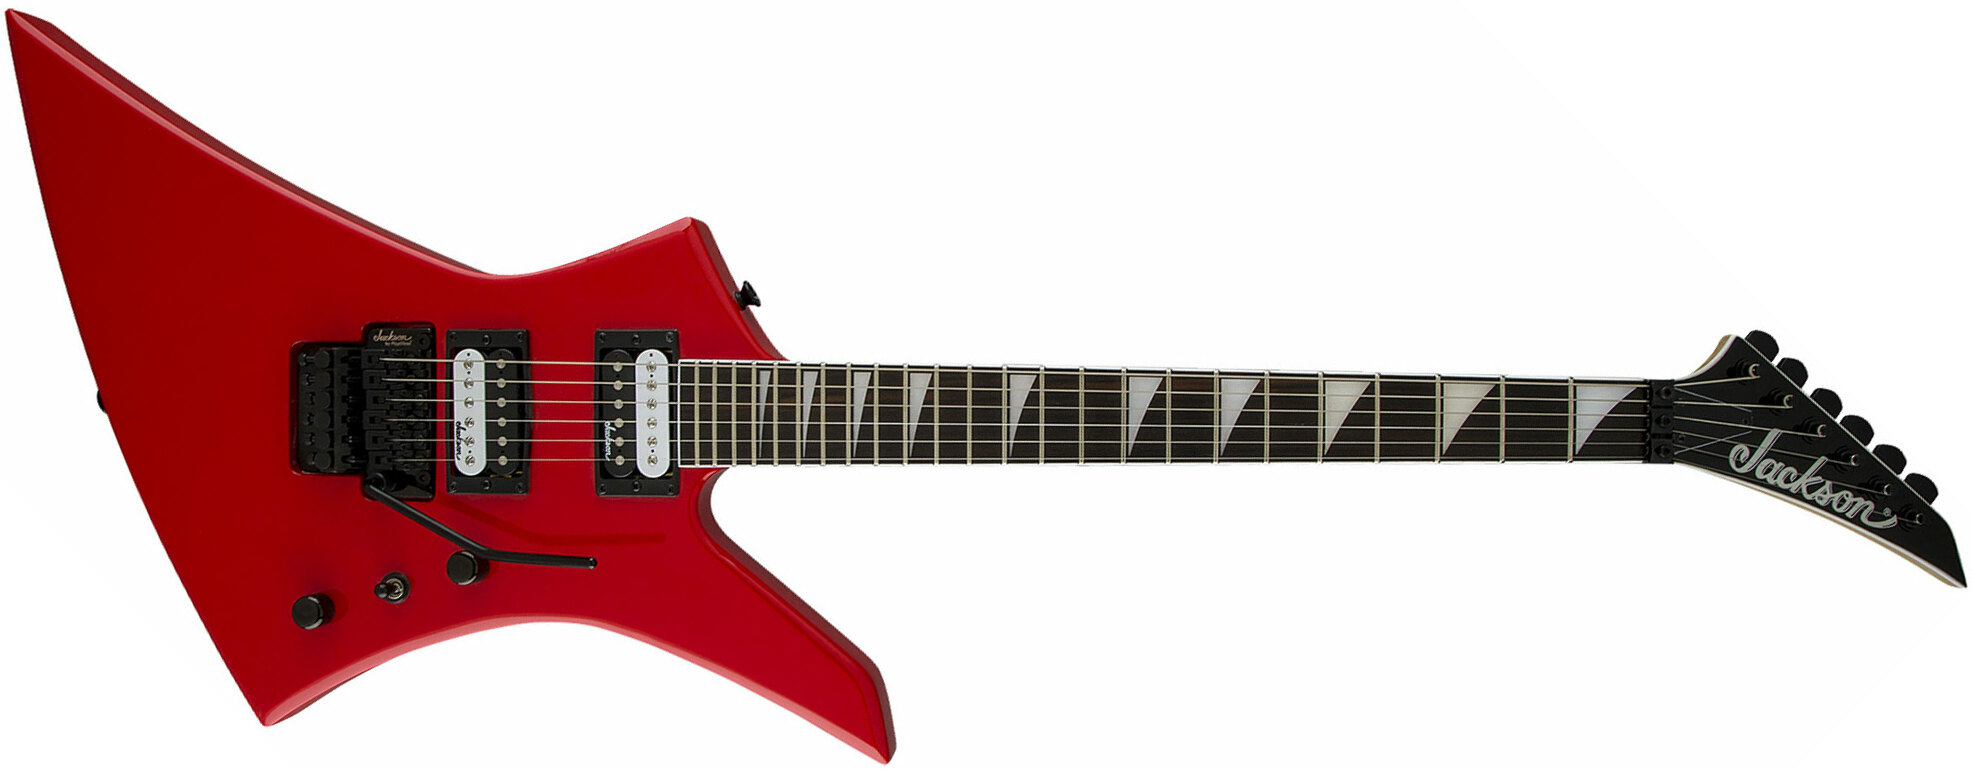 Jackson Kelly Js32 2h Fr Ama - Ferrari Red - Guitarra electrica metalica - Main picture